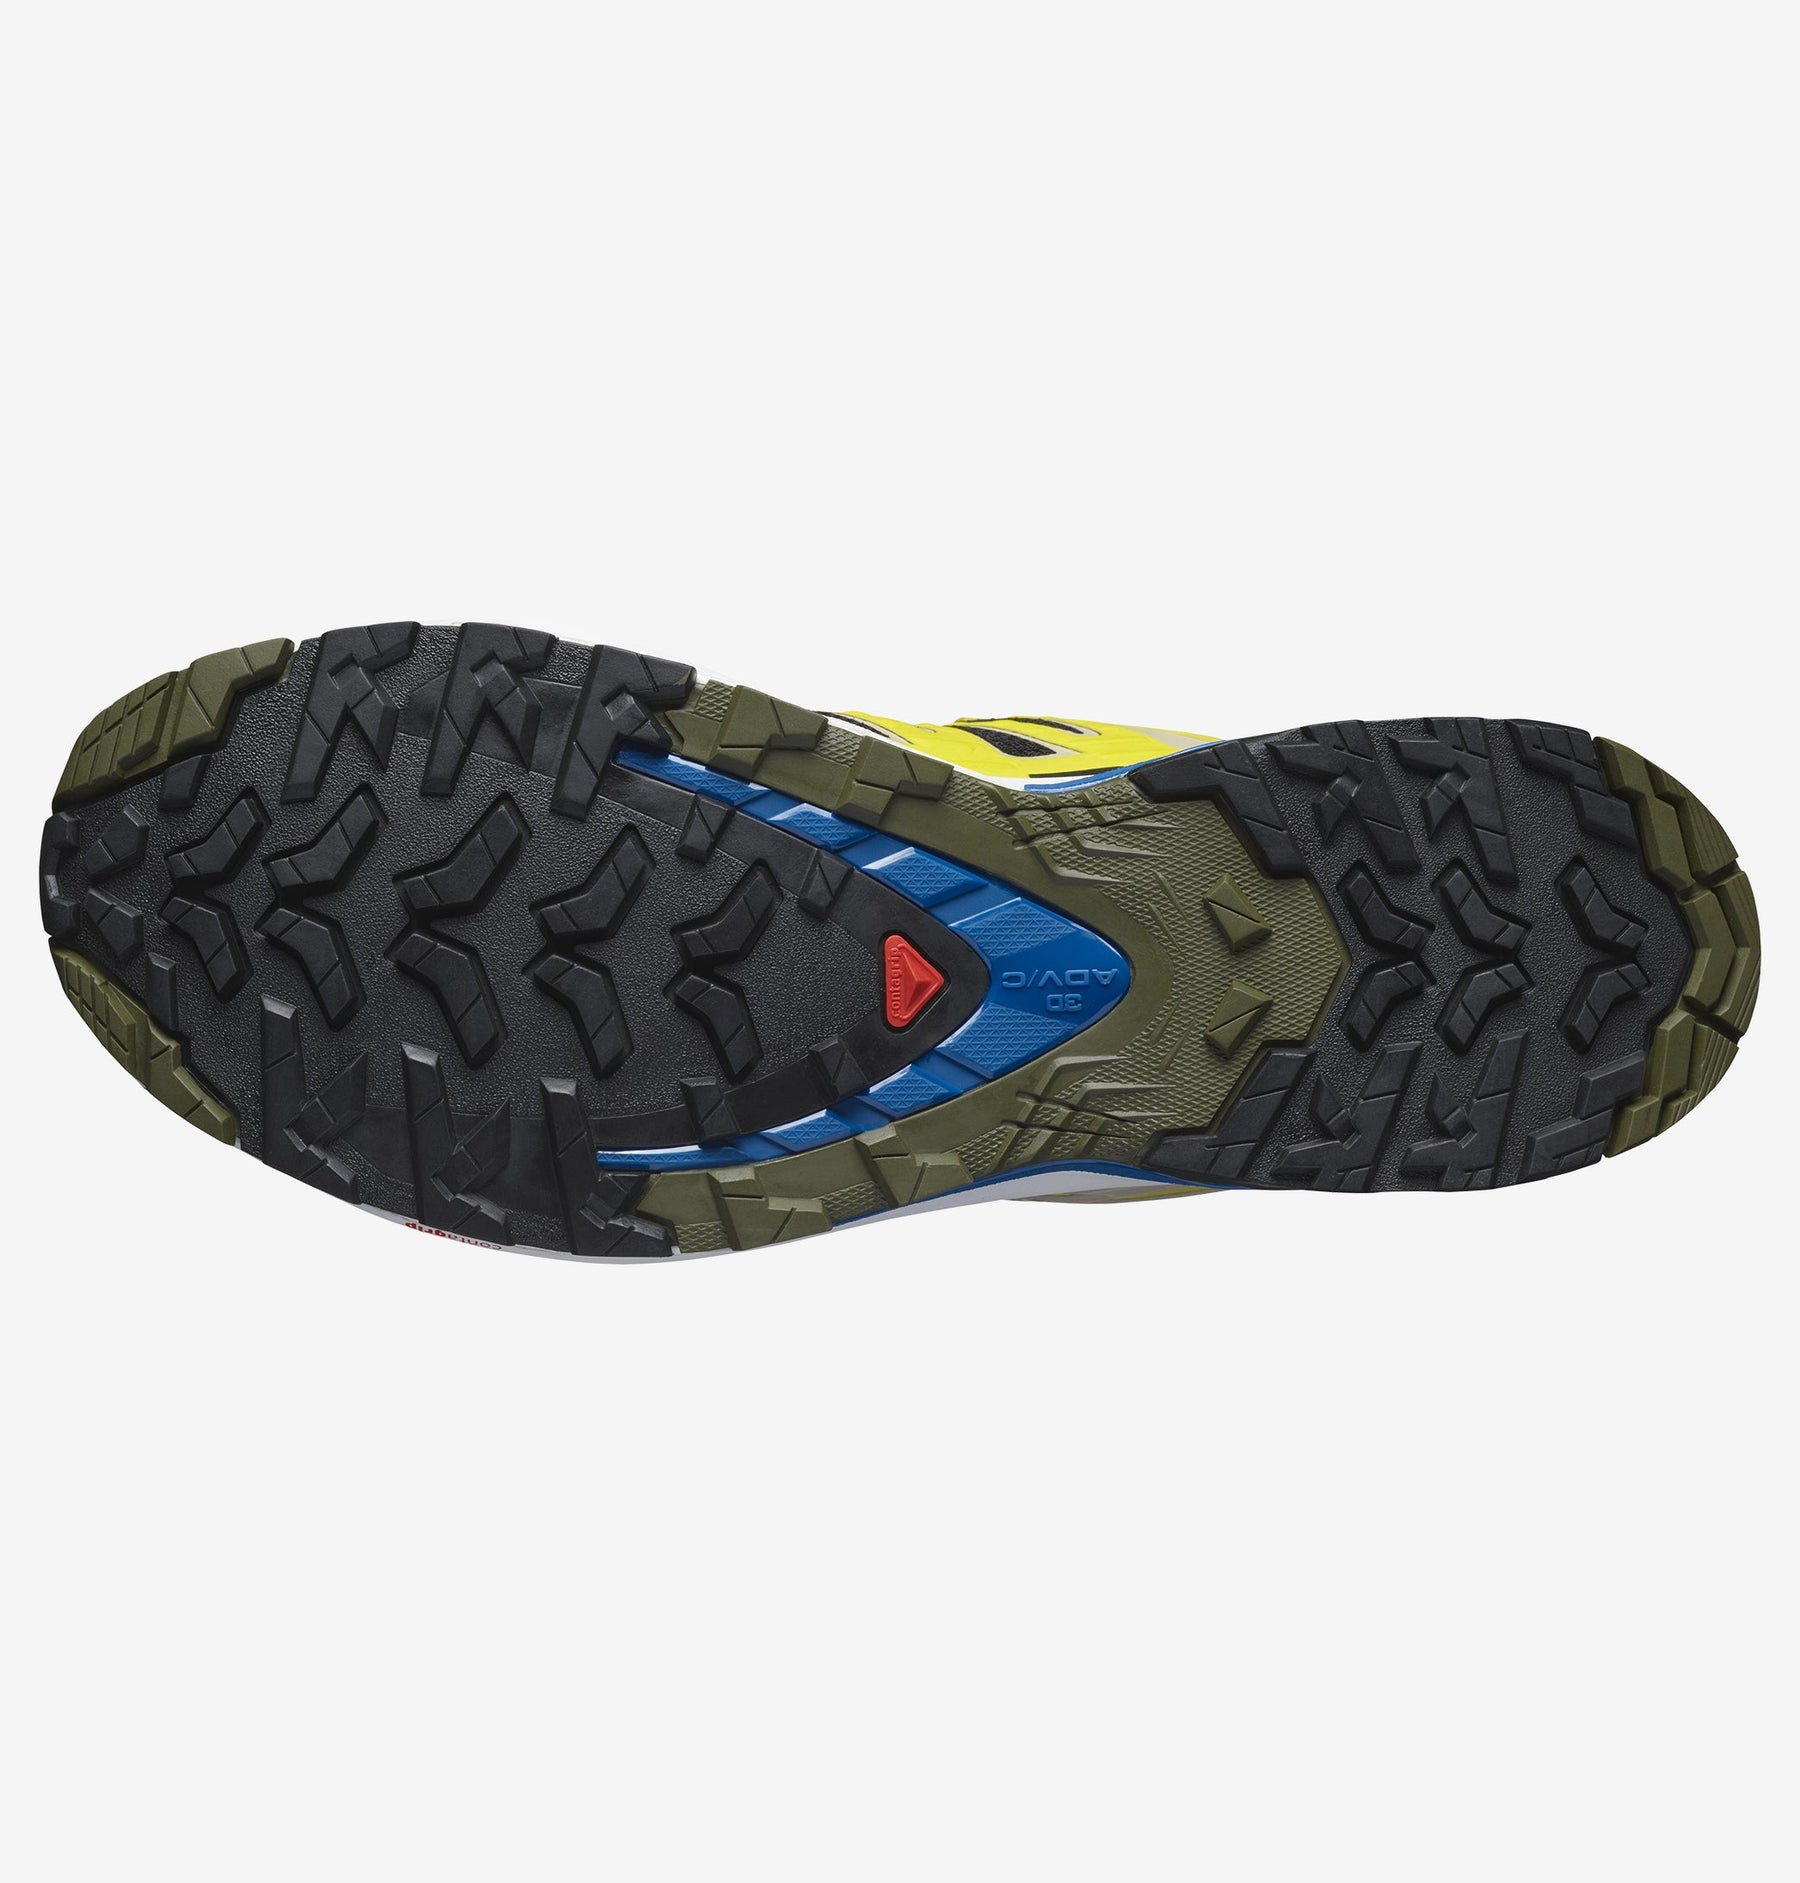 Salomon XA PRO 3D V9 Gore-Tex - Scarpe da Trail Running Uomo - Neverland Firenze